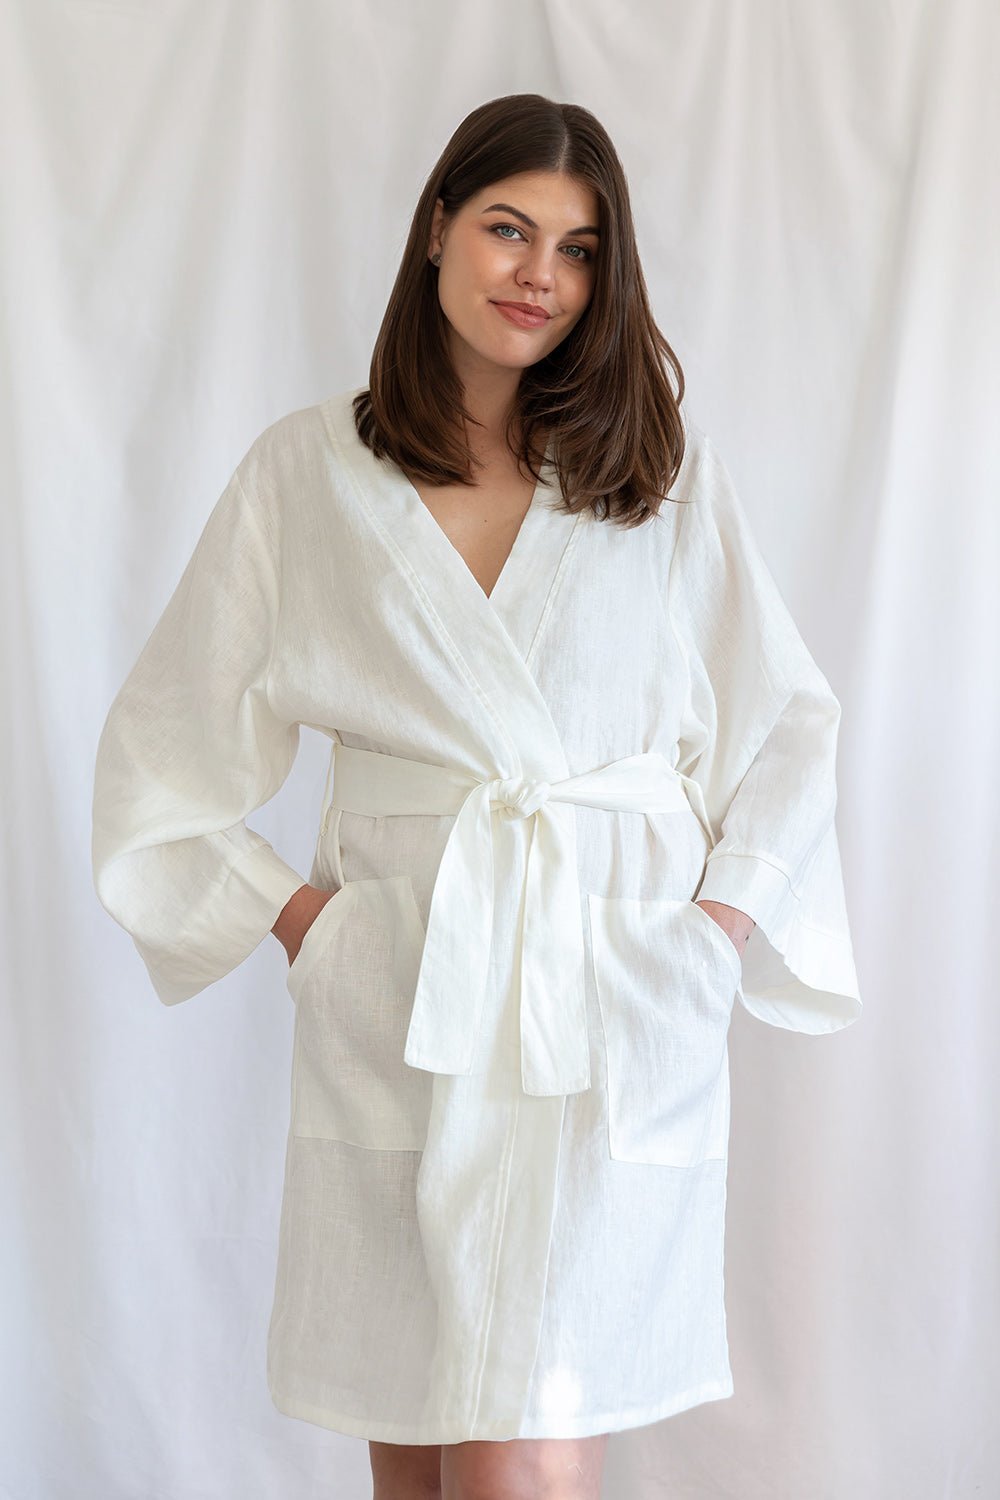 100% linen robe designed in NZ